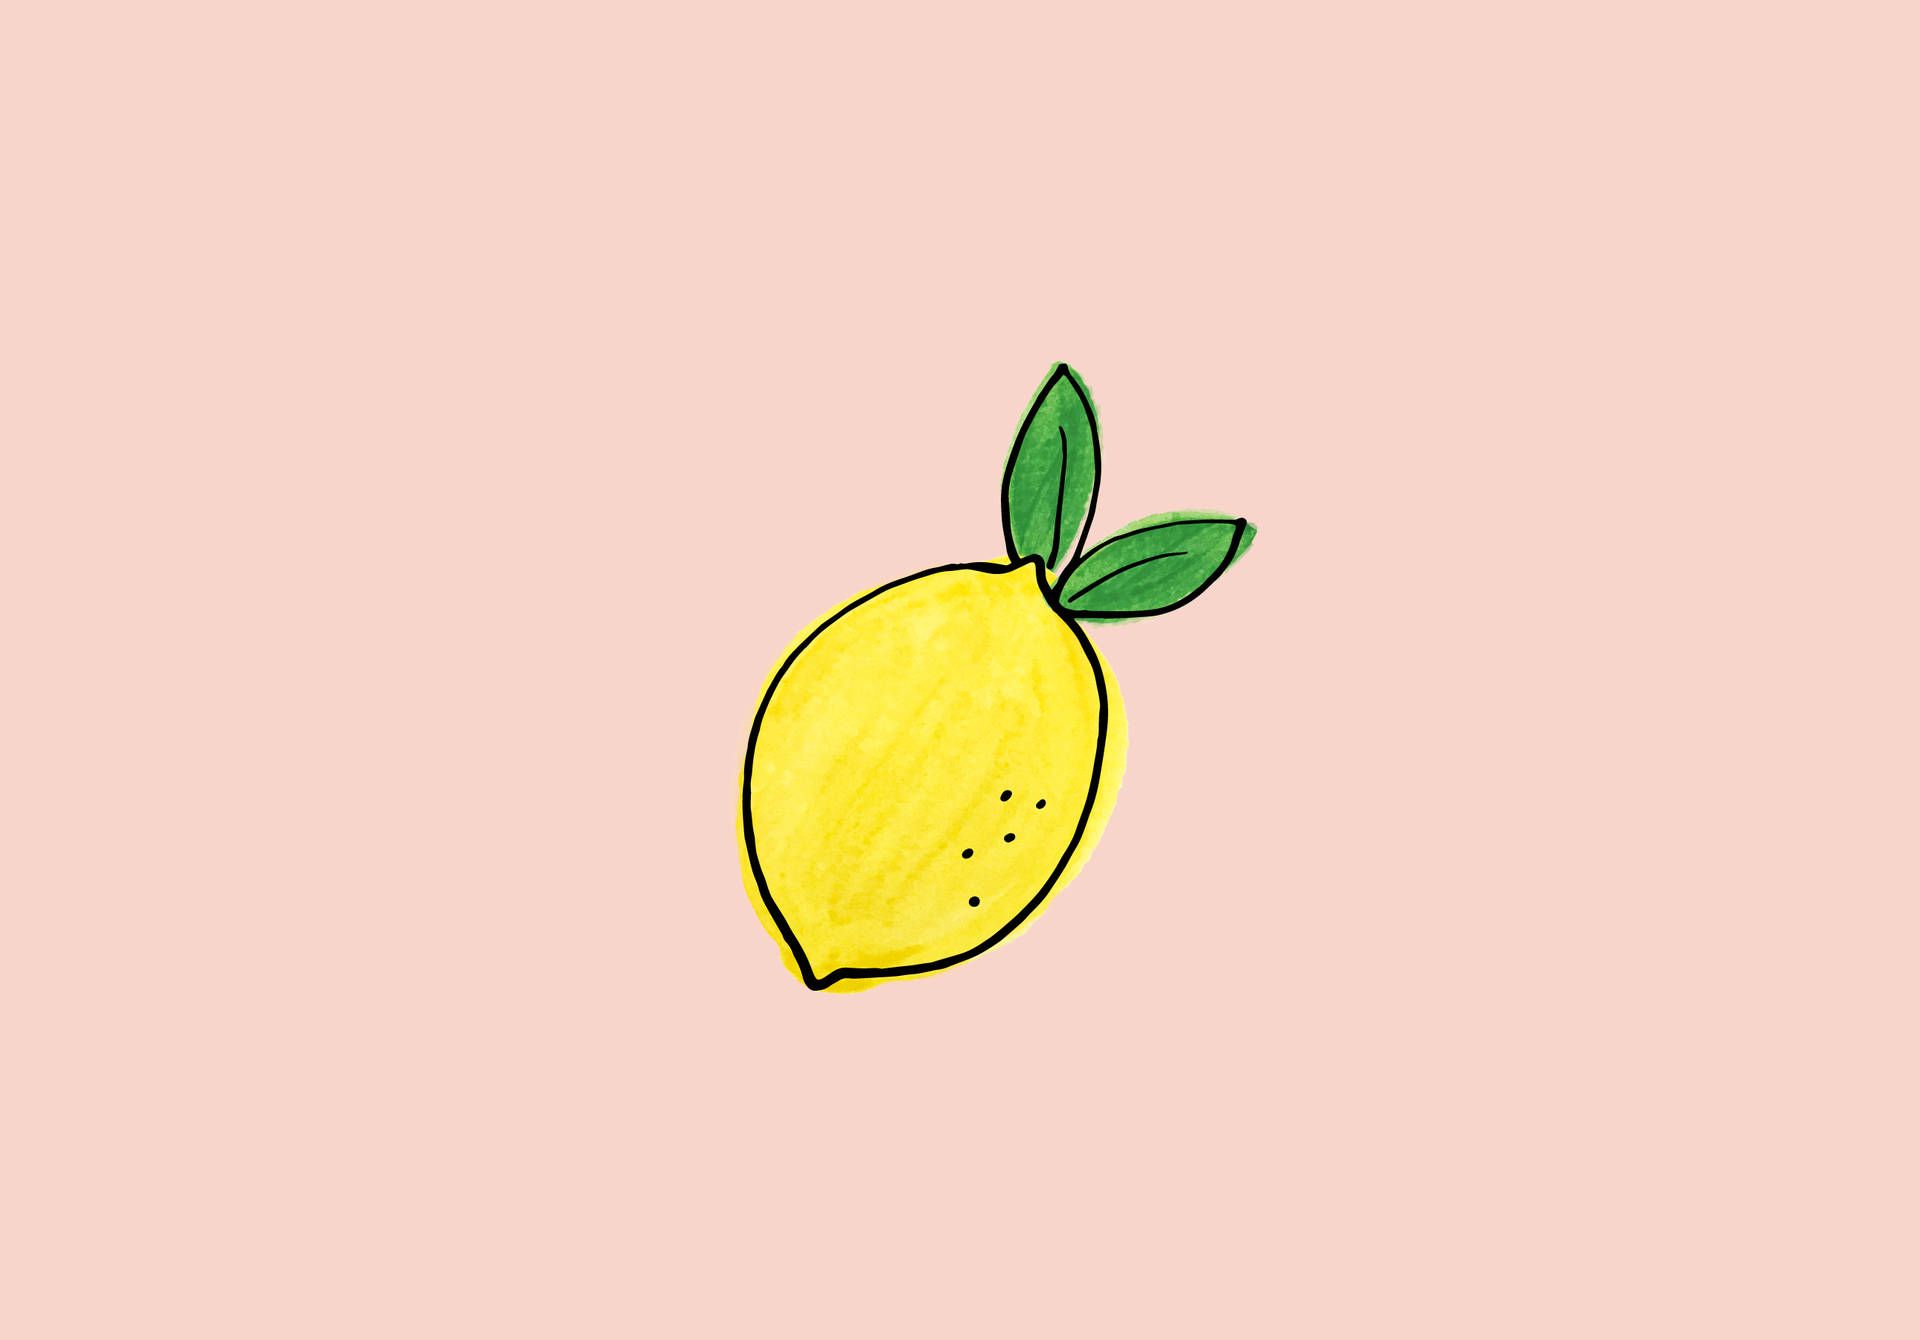 Free Lemon Wallpaper Downloads, Lemon Wallpaper for FREE